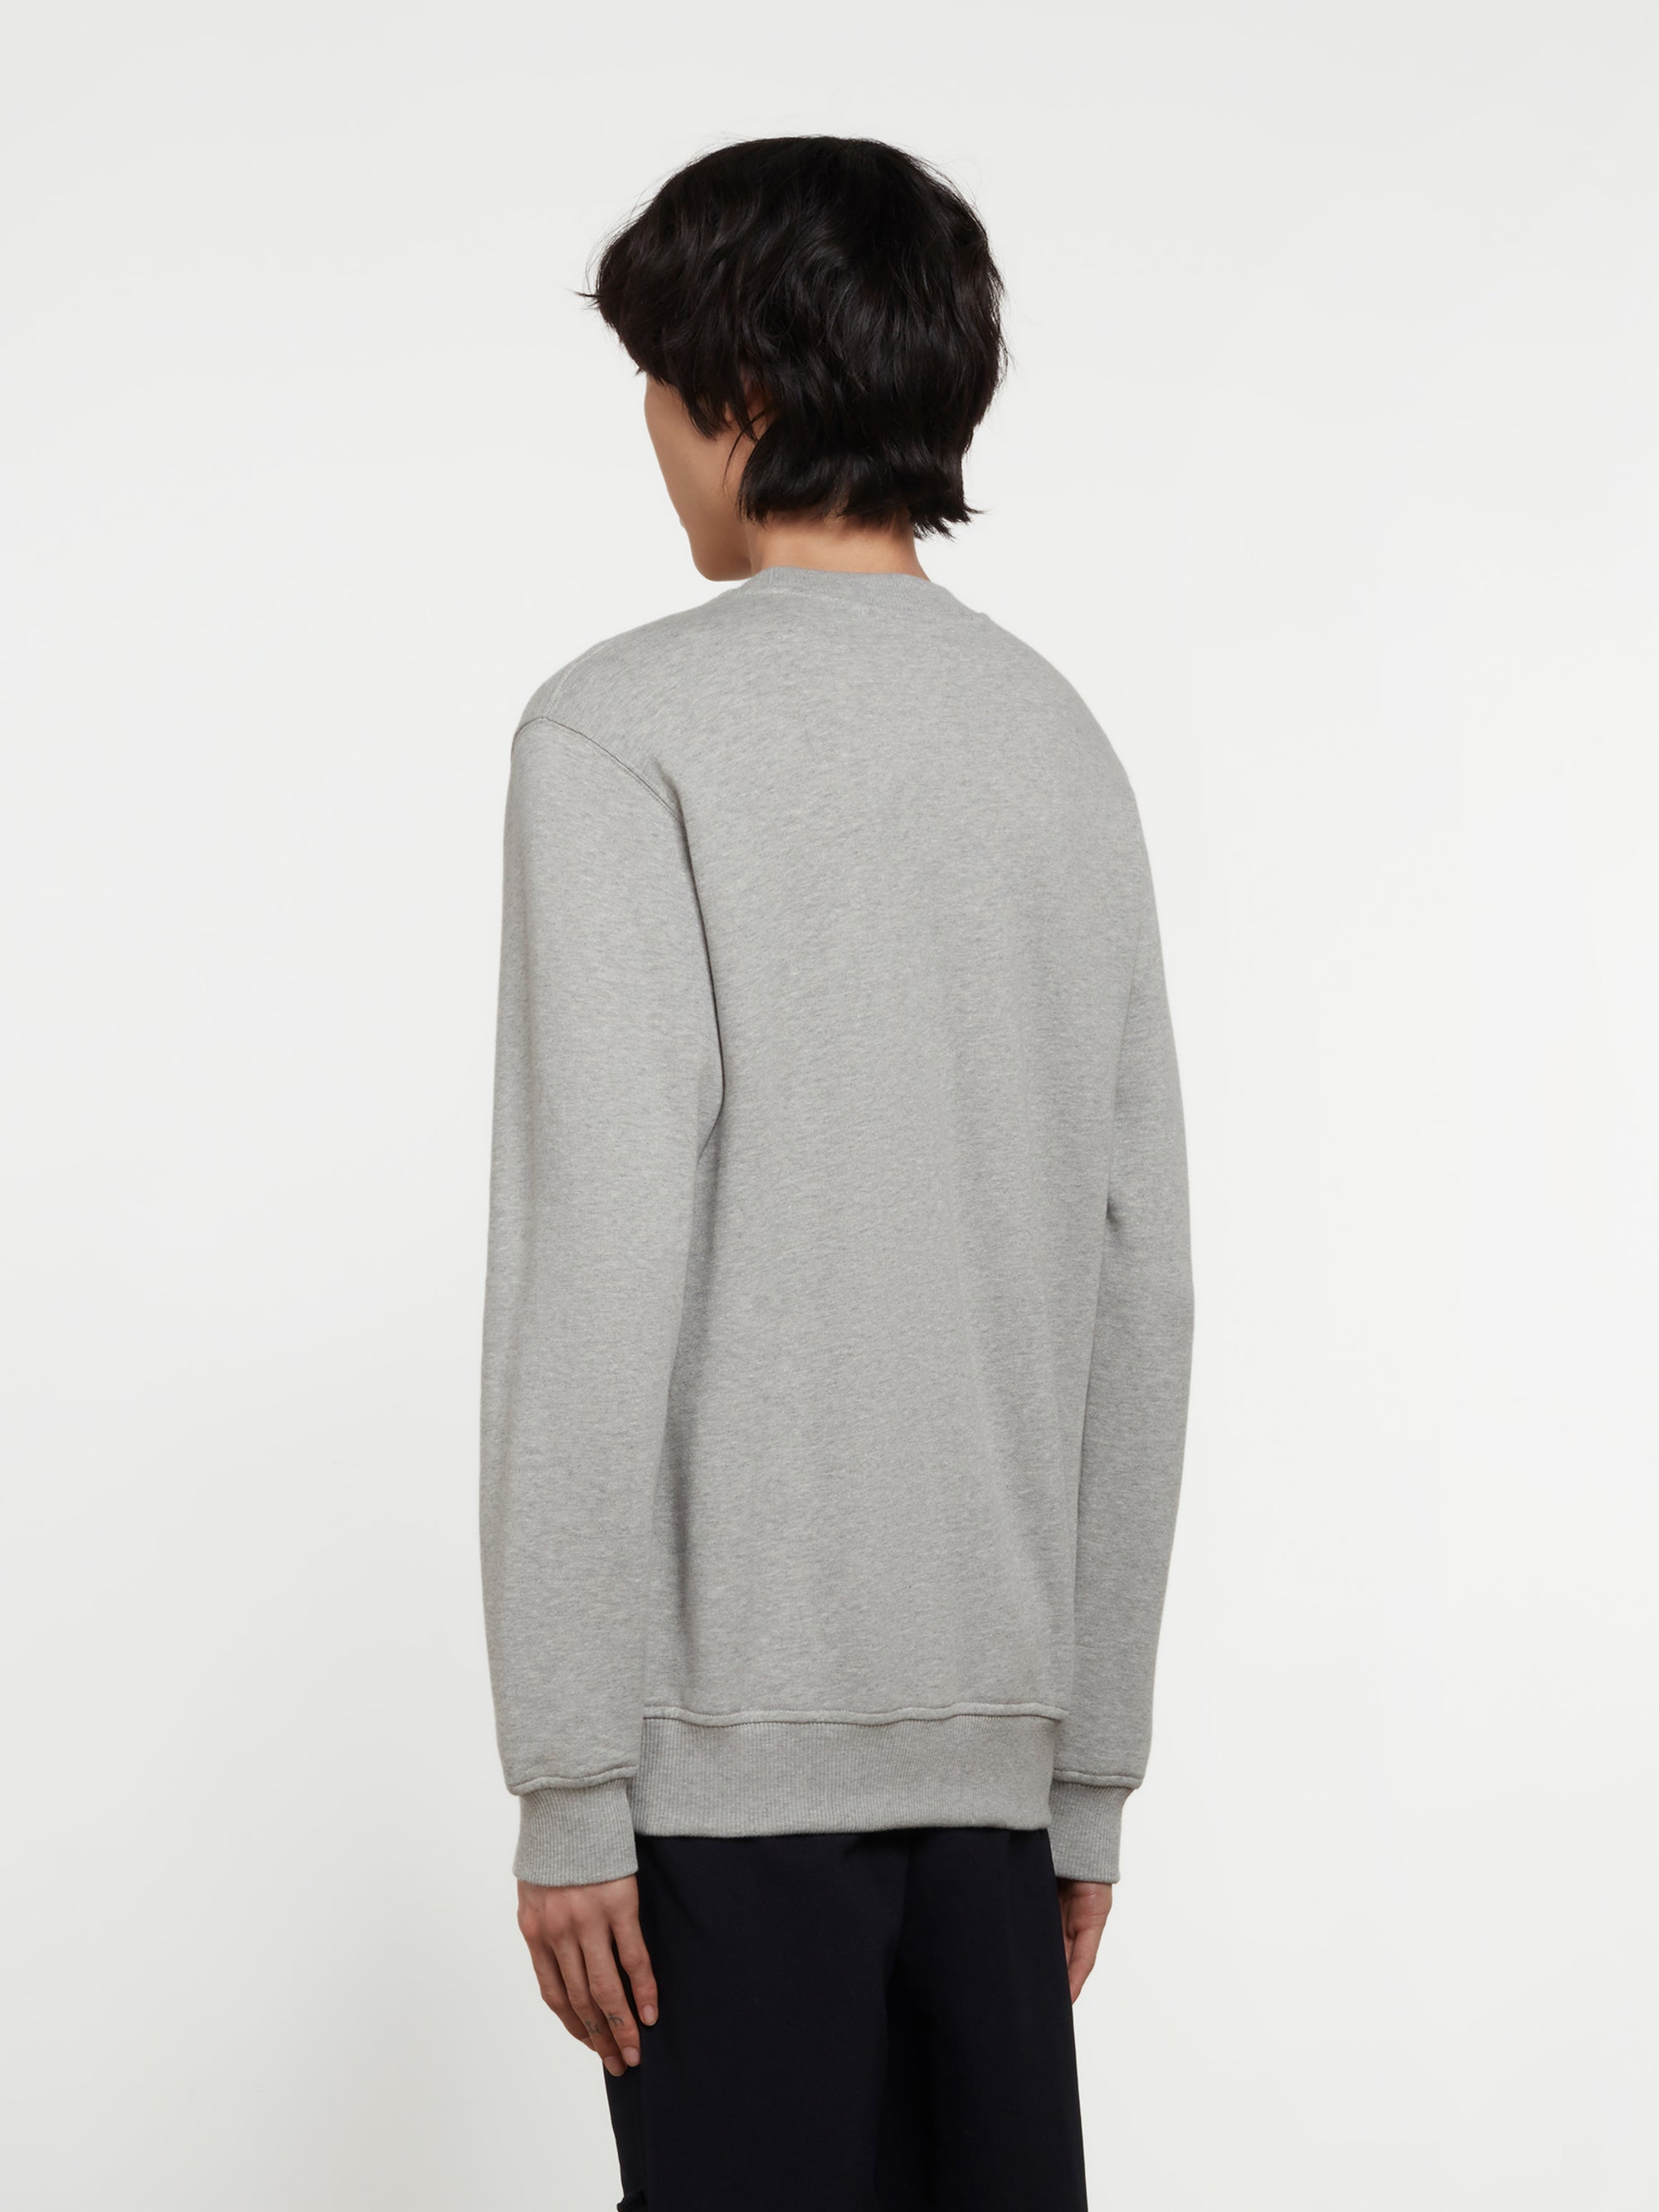 CDG Shirt - Lacoste Men's Cotton Sweatshirt - (Grey) view 3